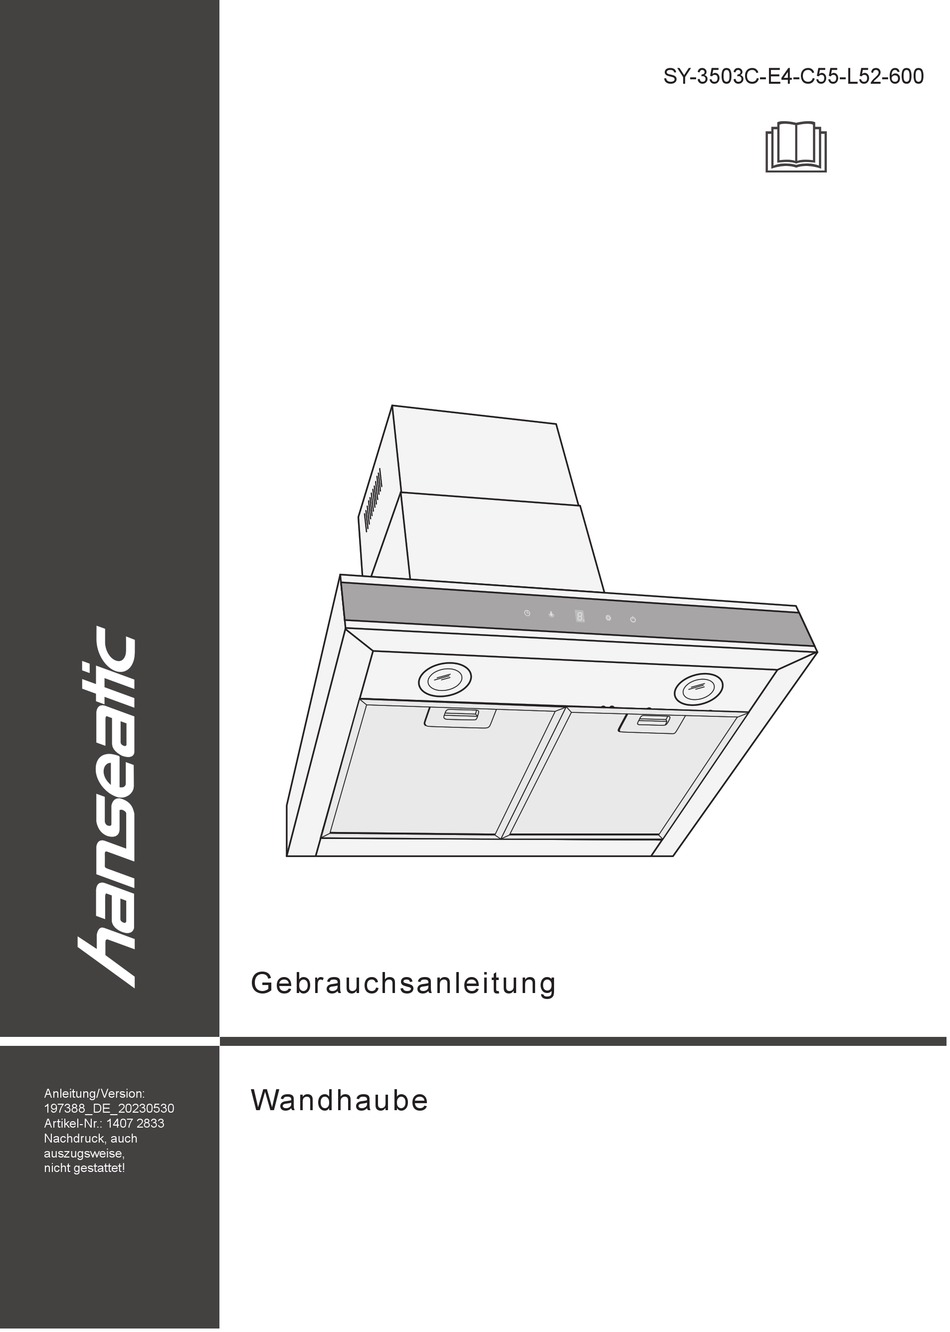 Bohrlöcher Setzen; Dunstabzugshaube Anbringen - Hanseatic SY -3503C-E4-C55-L52-600 User Manual [Page 18] | ManualsLib | Wandhauben